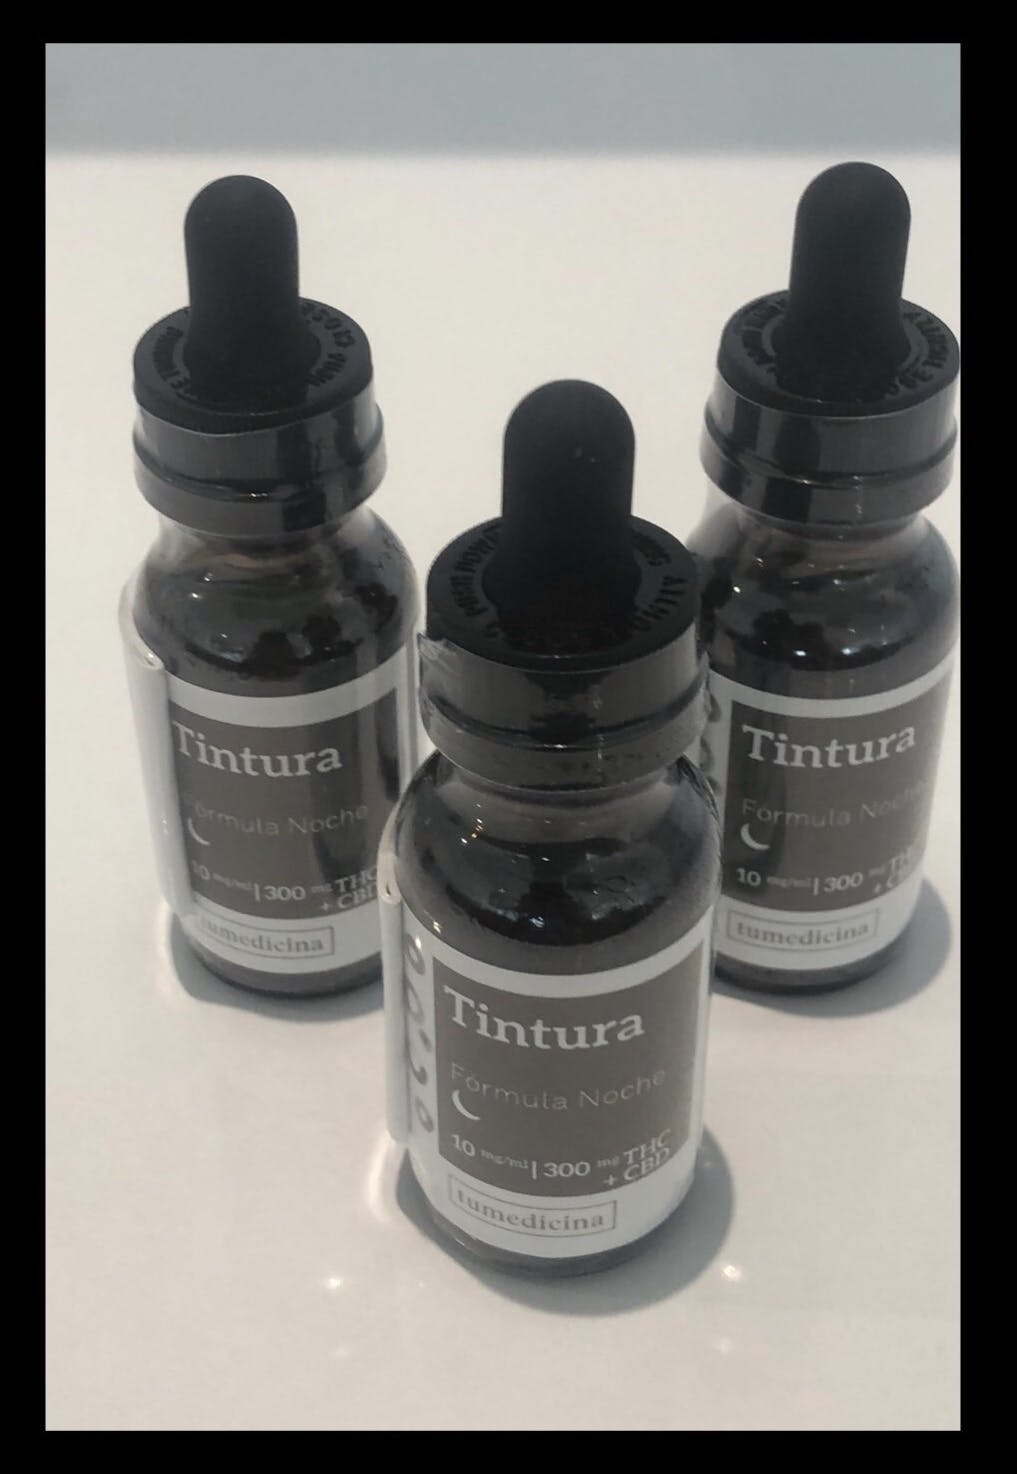 tincture-tintura-formula-noche-9-63-25thc-2-66-25cbd-2445-00